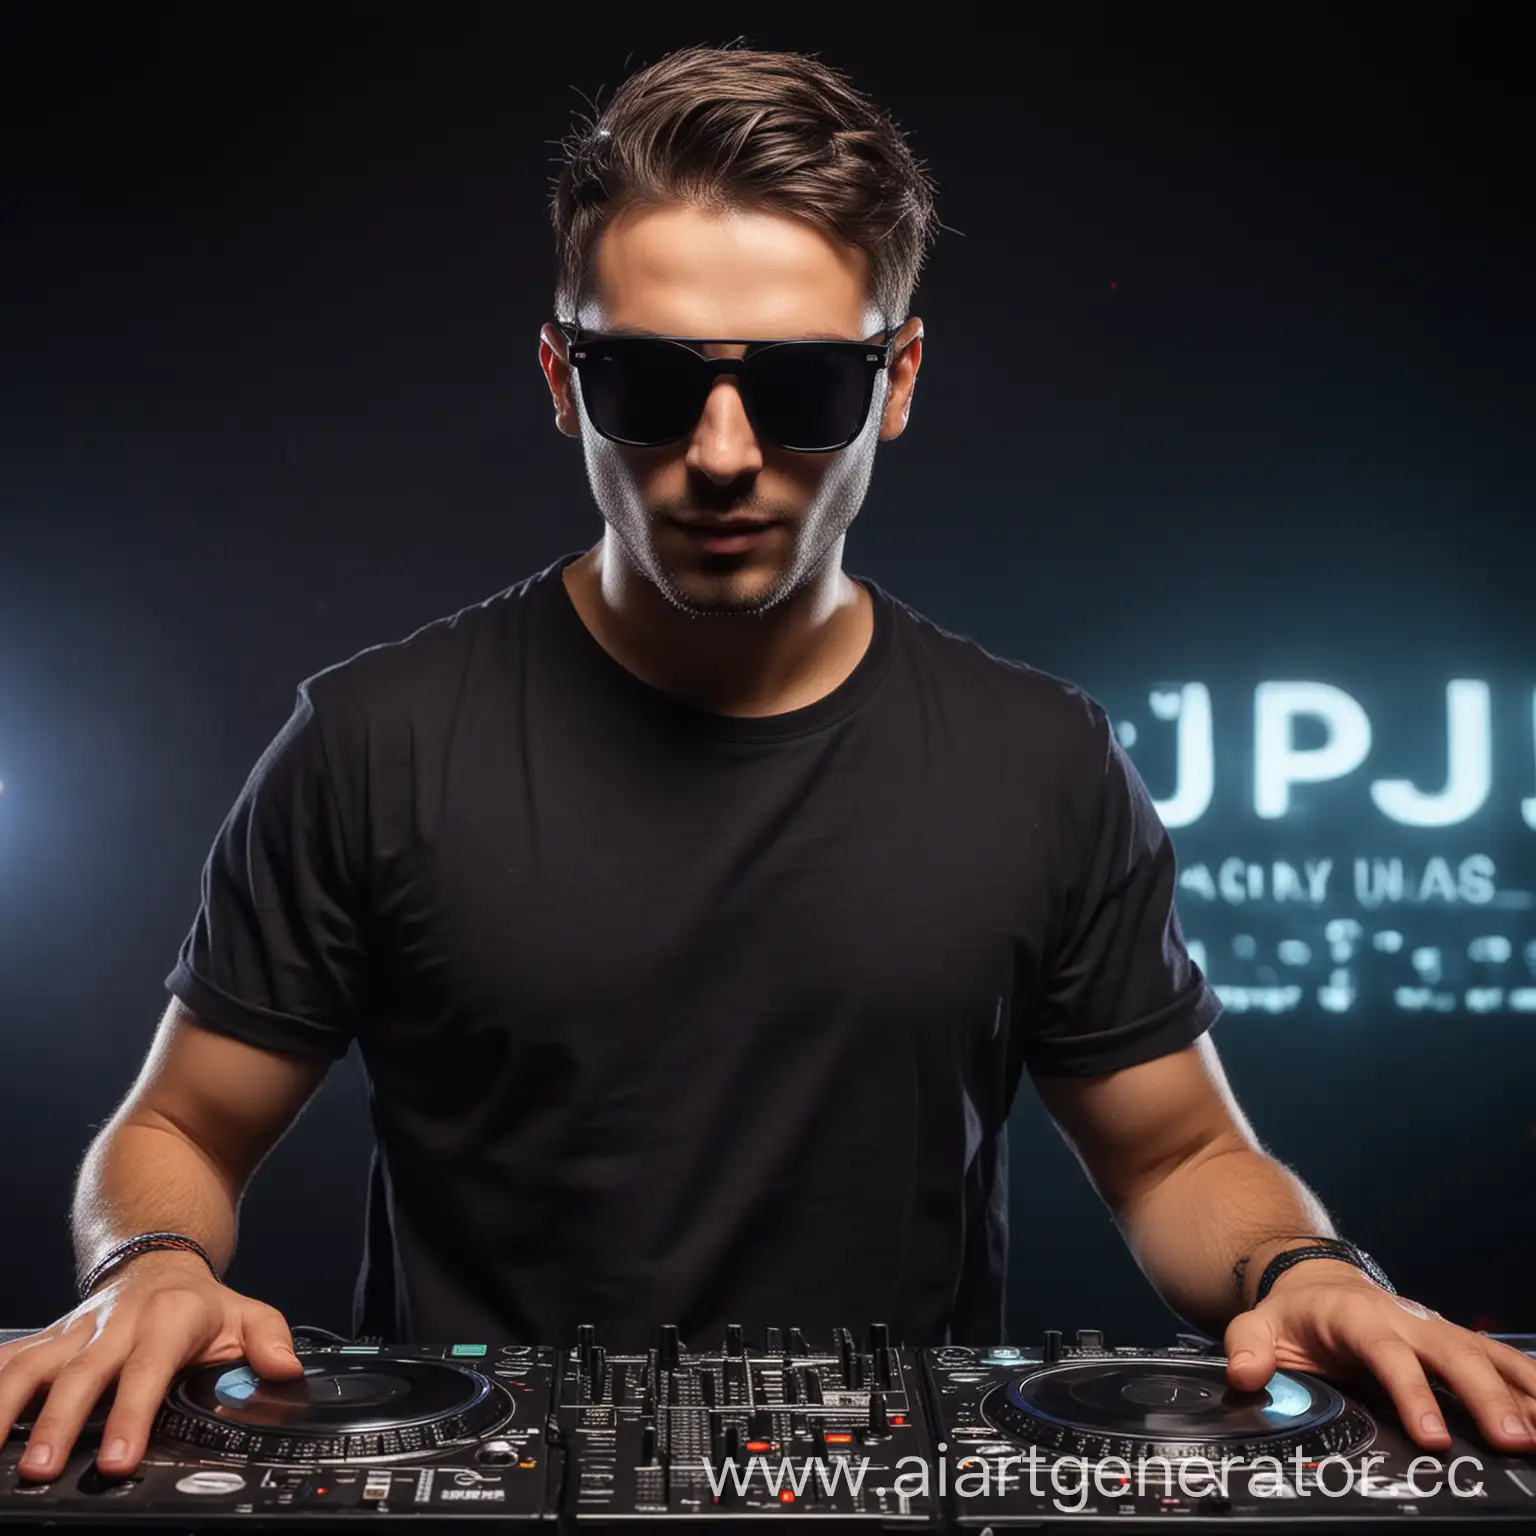 Male-DJ-Performance-in-Nightclub-with-Dark-Sunglasses